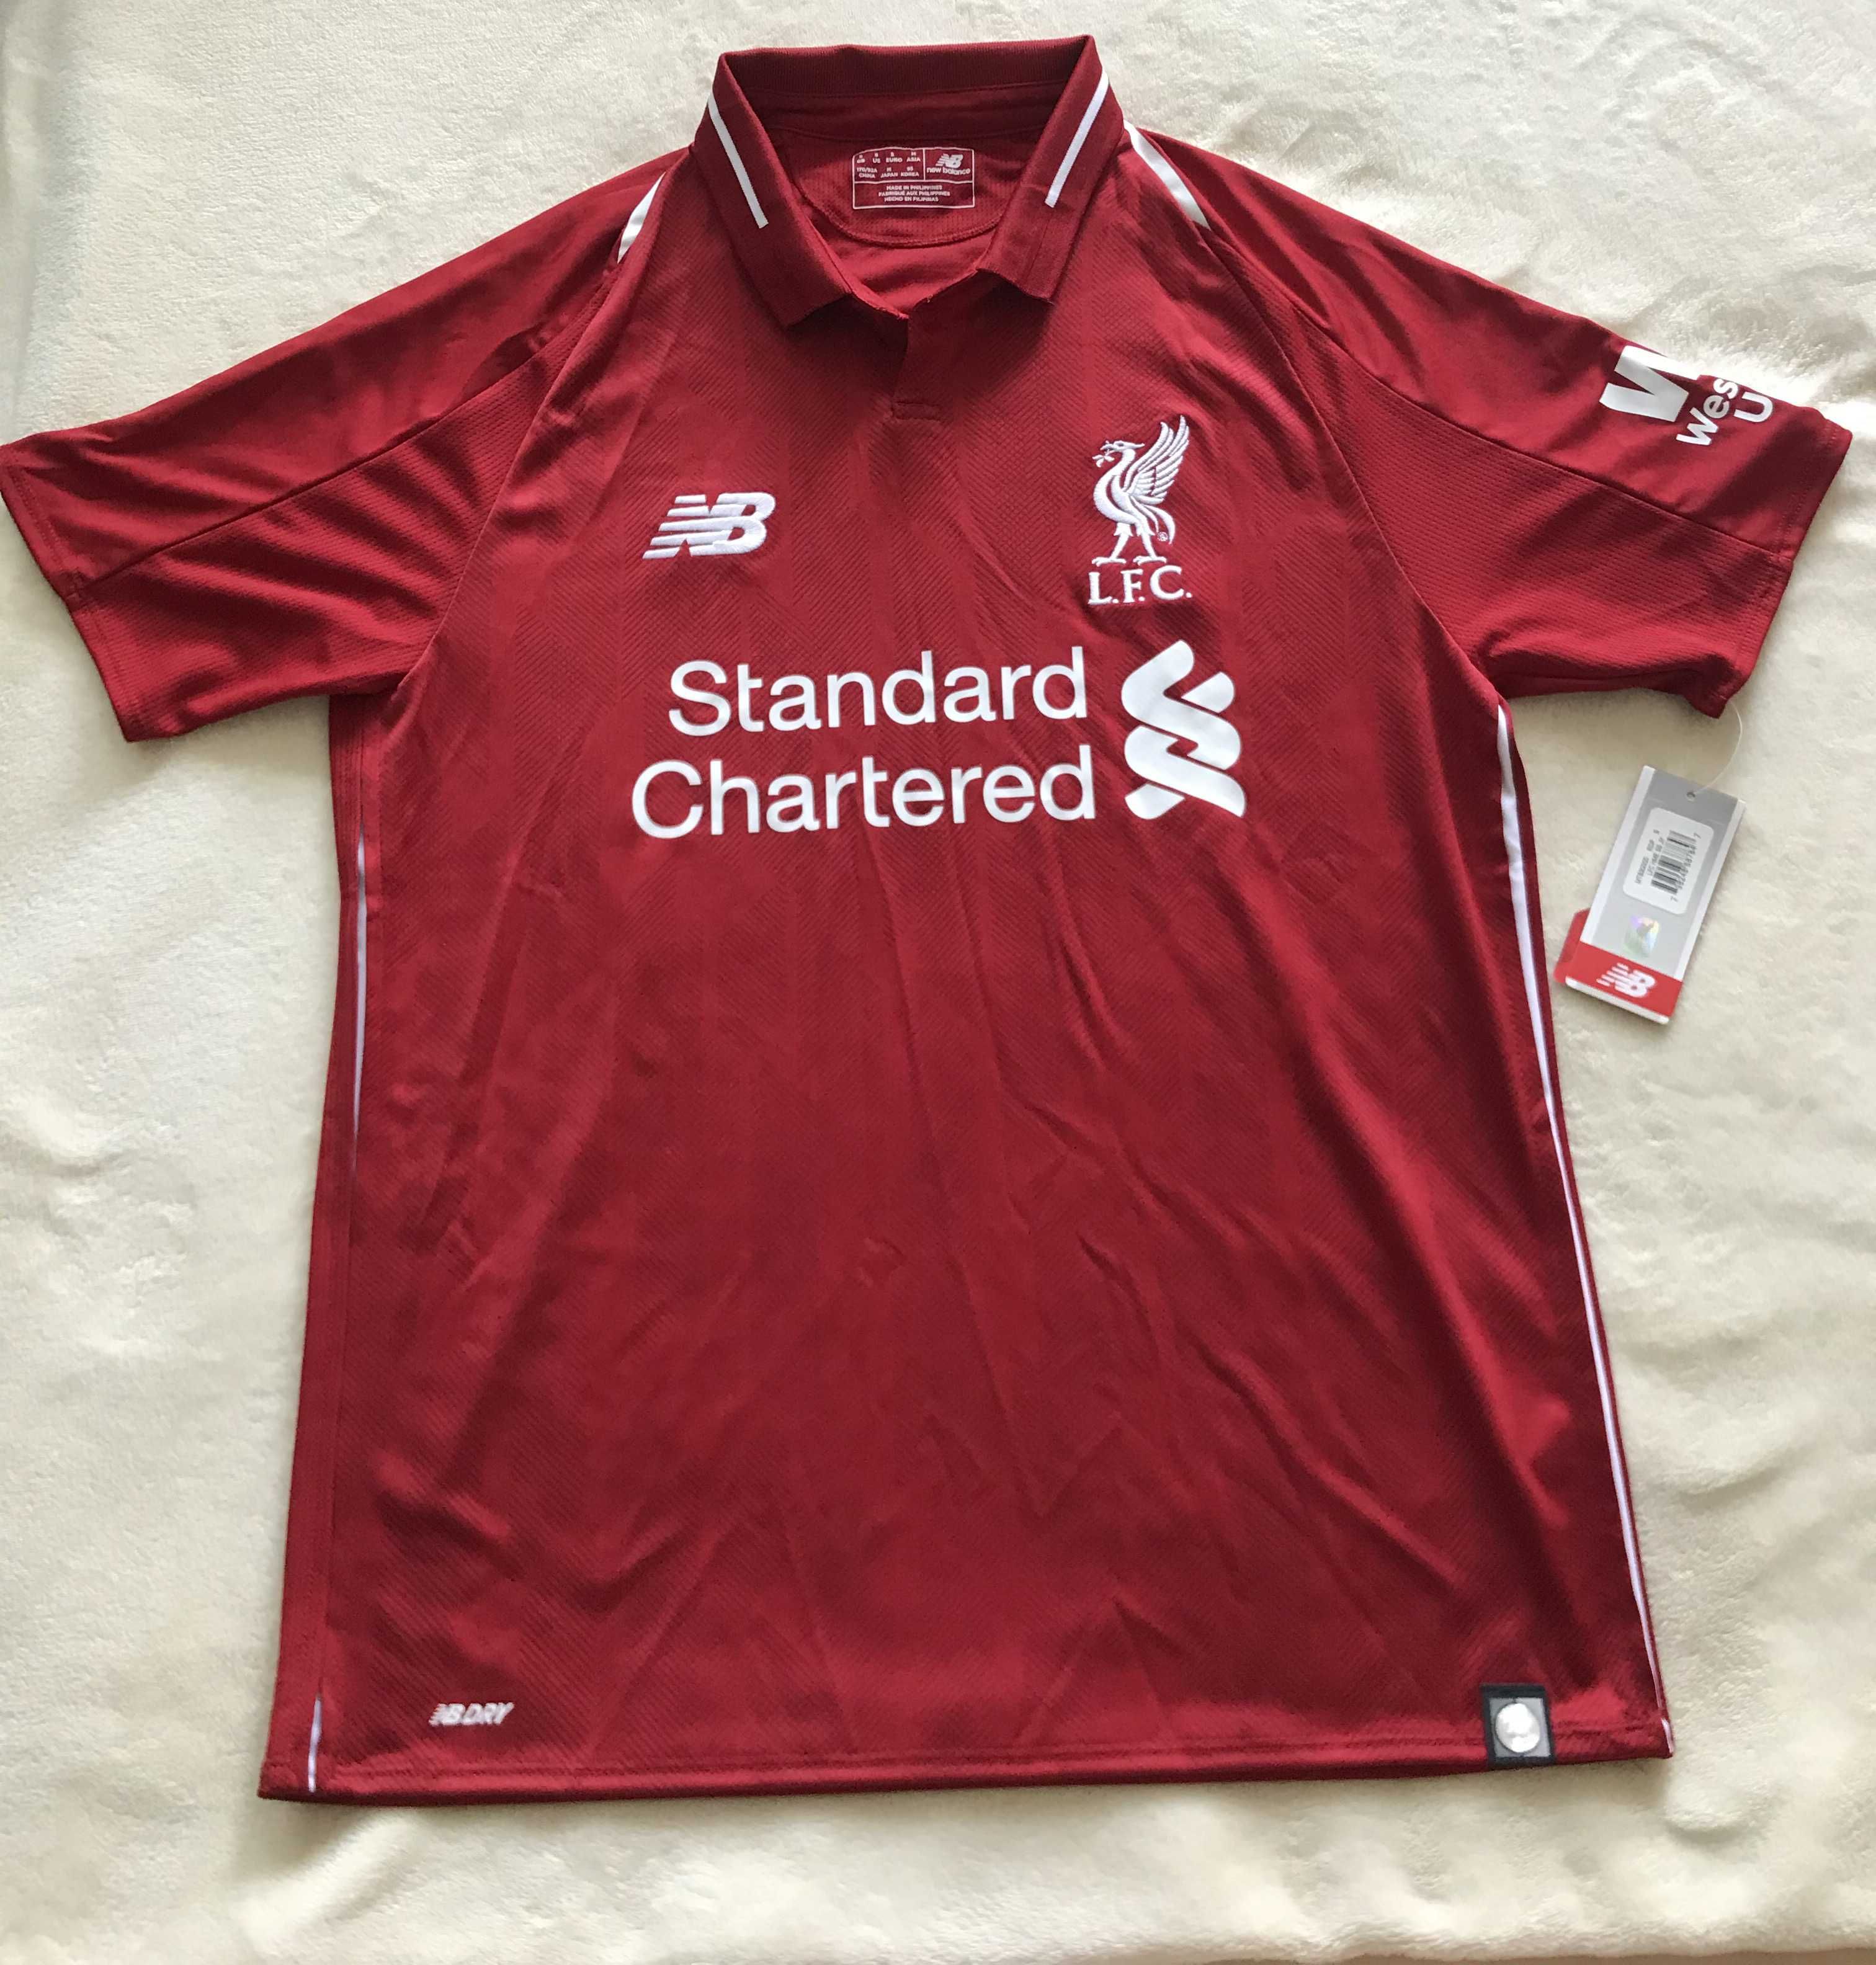 Koszulka piłkarska Liverpool FC New Balance NOWA r. S z metkami